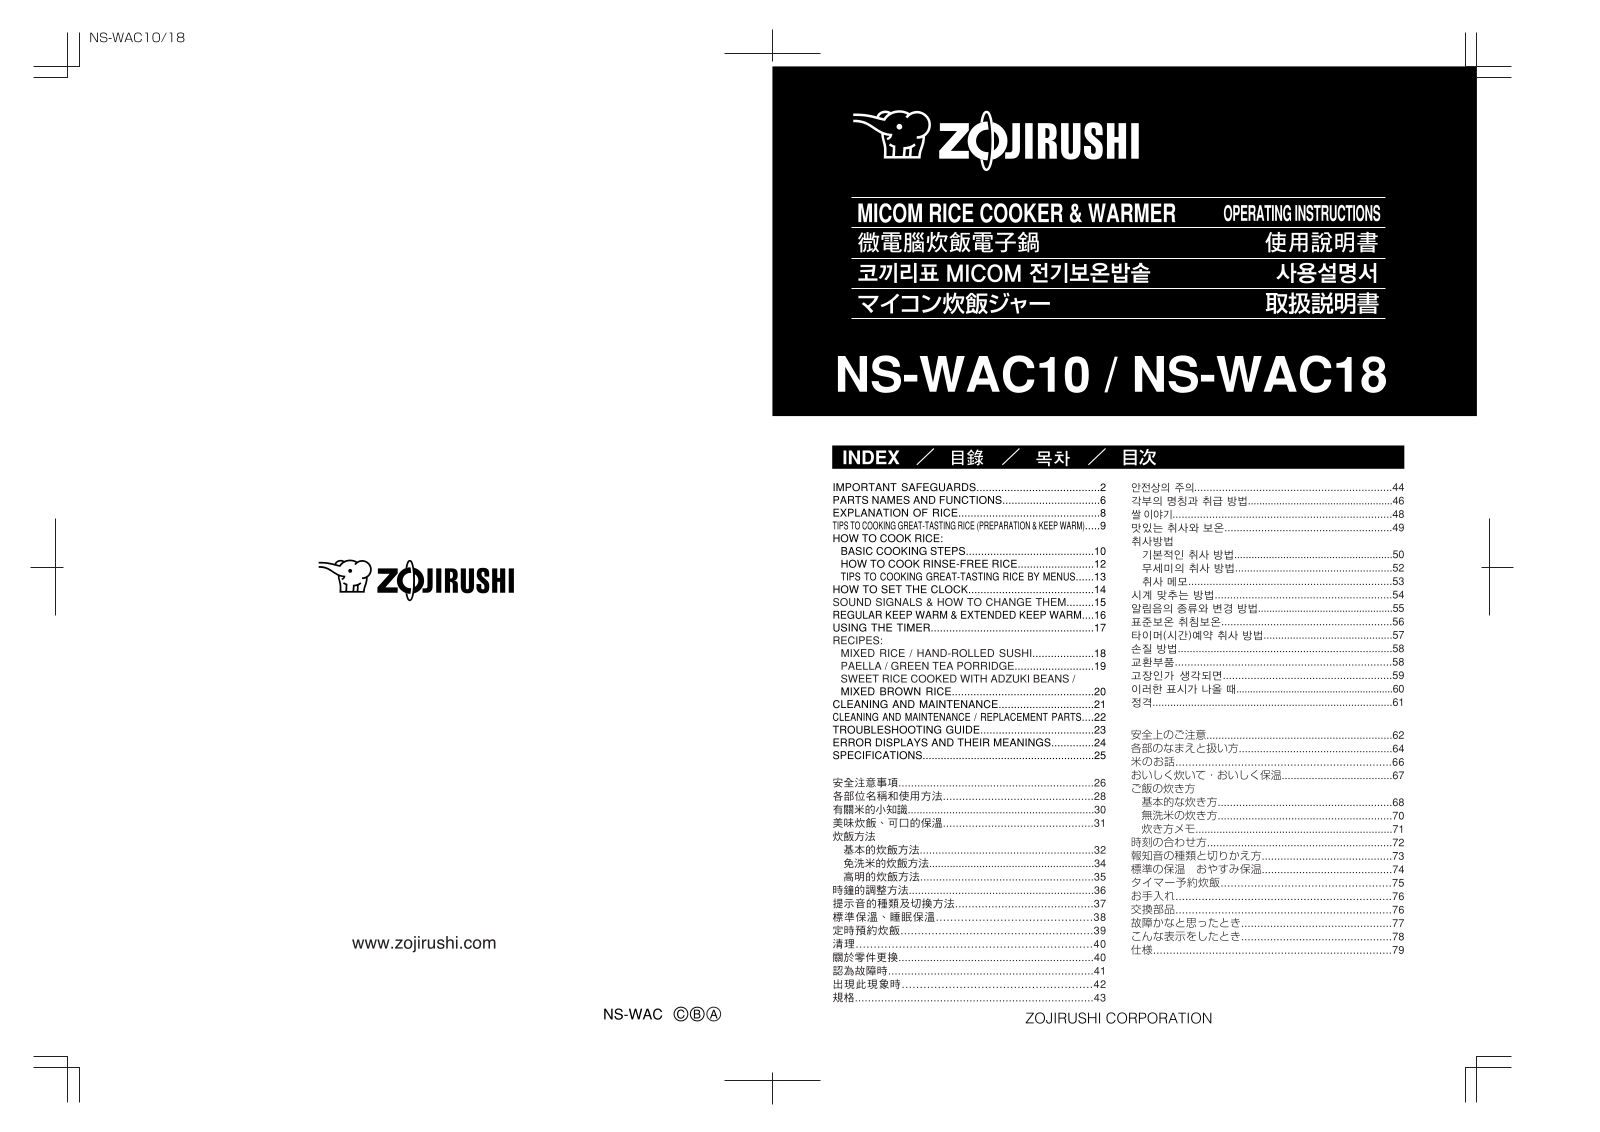 Zojirushi NS-WAC10, NS-WAC18 User Manual